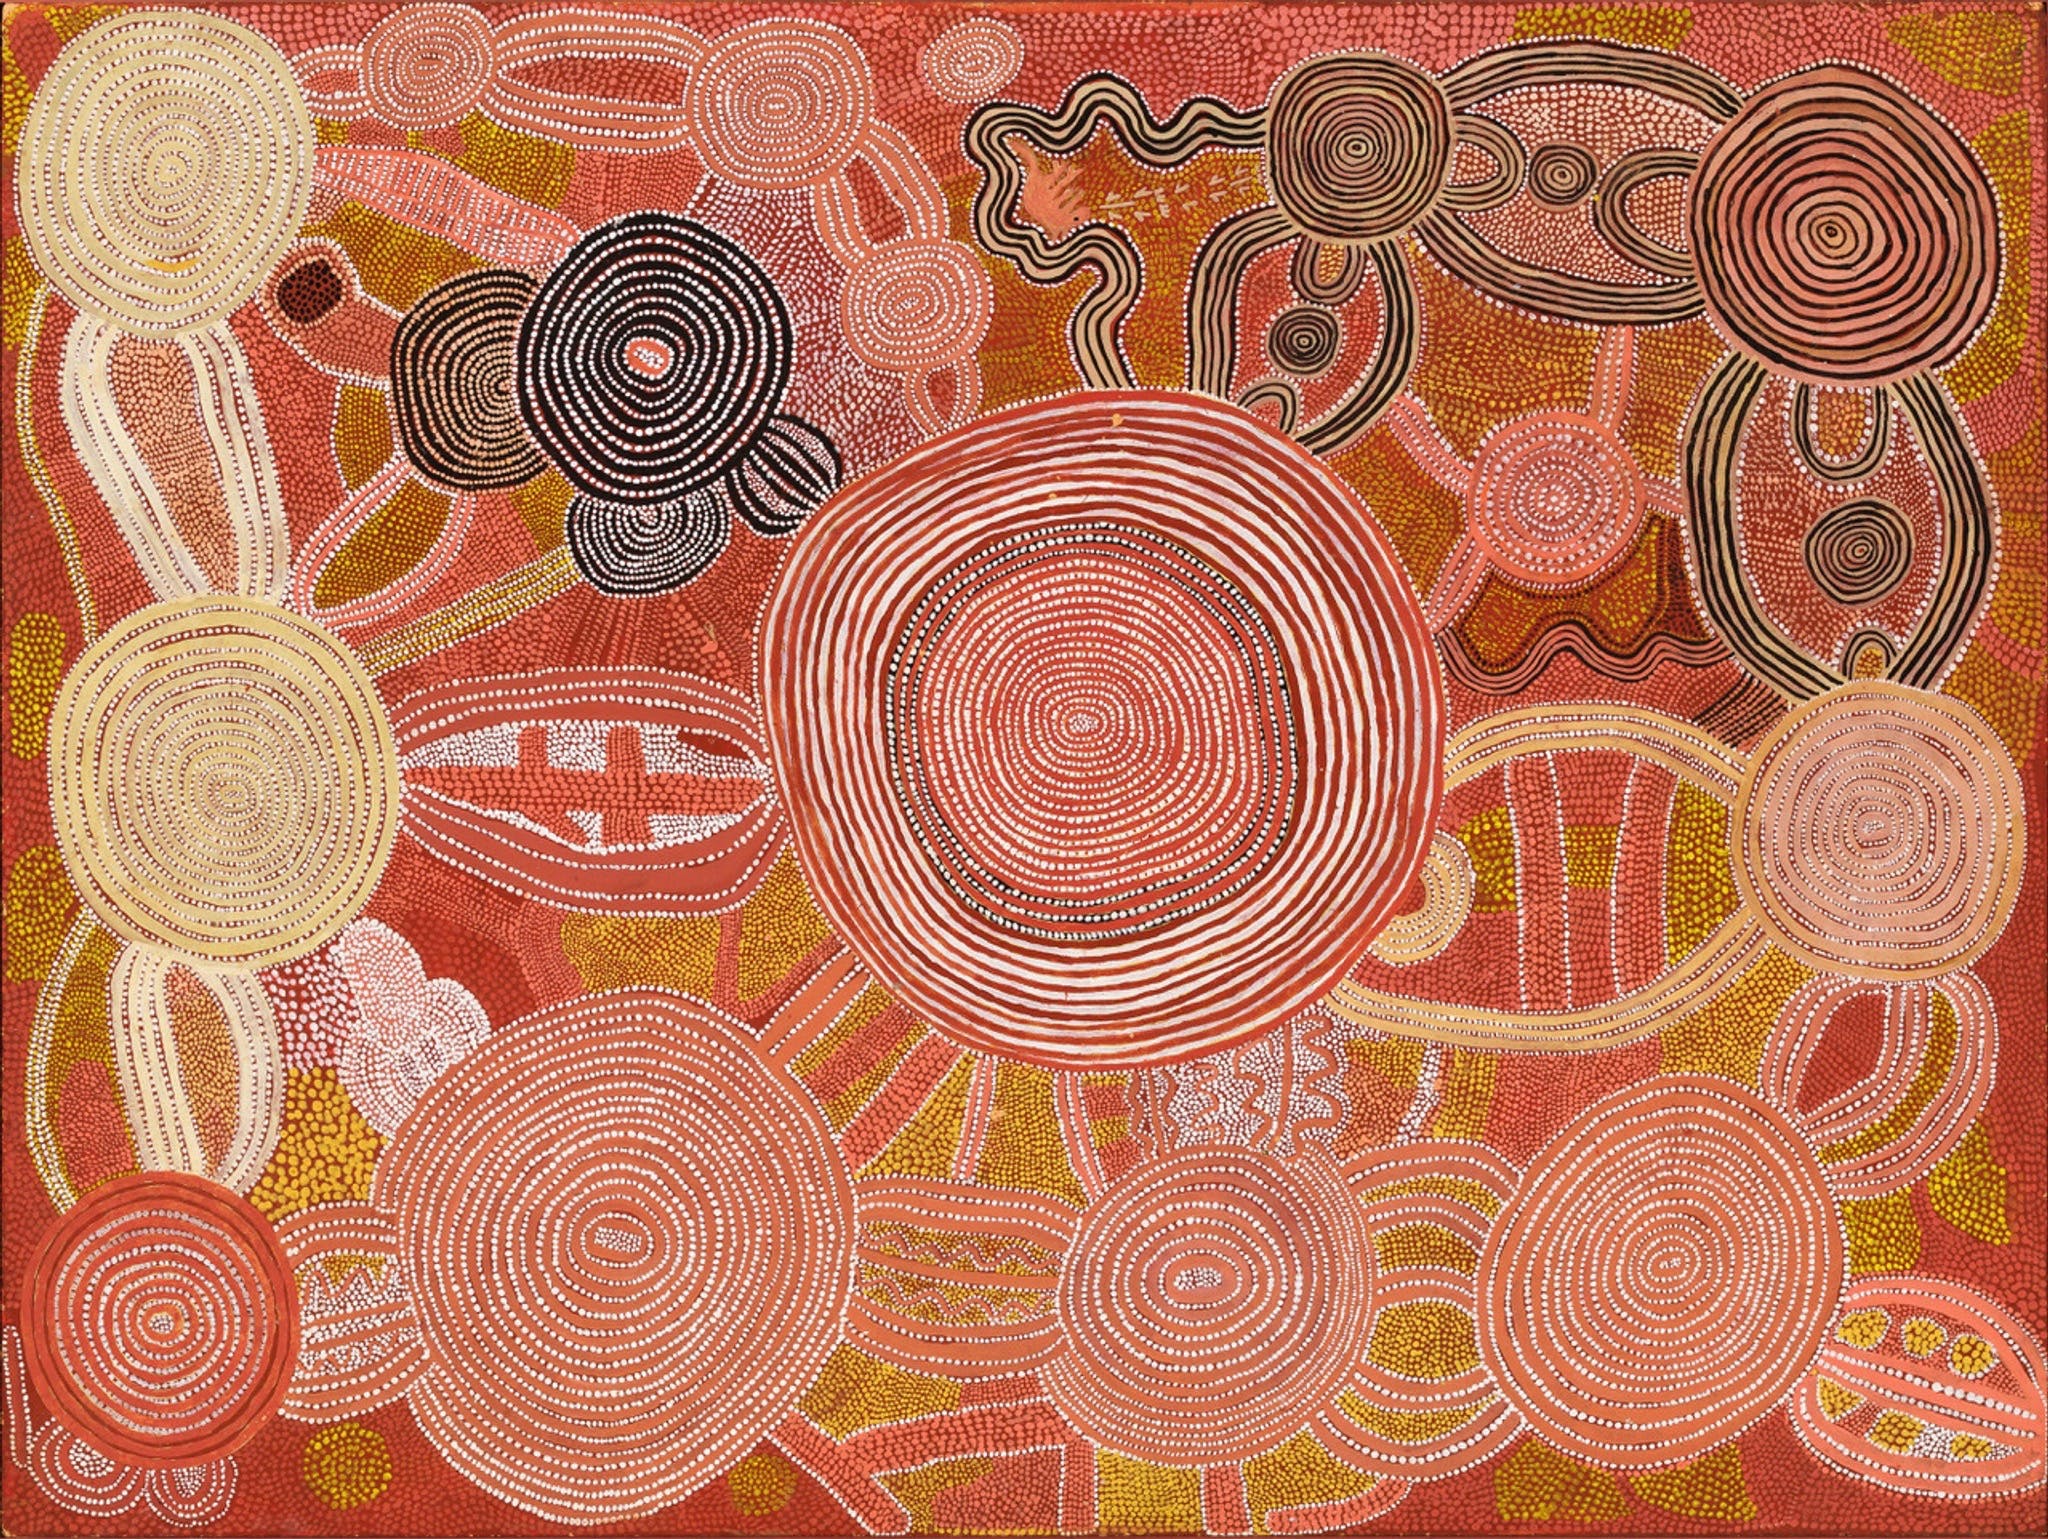 Reverence Exhibition of Australian Indigenous Art - Accommodation QLD